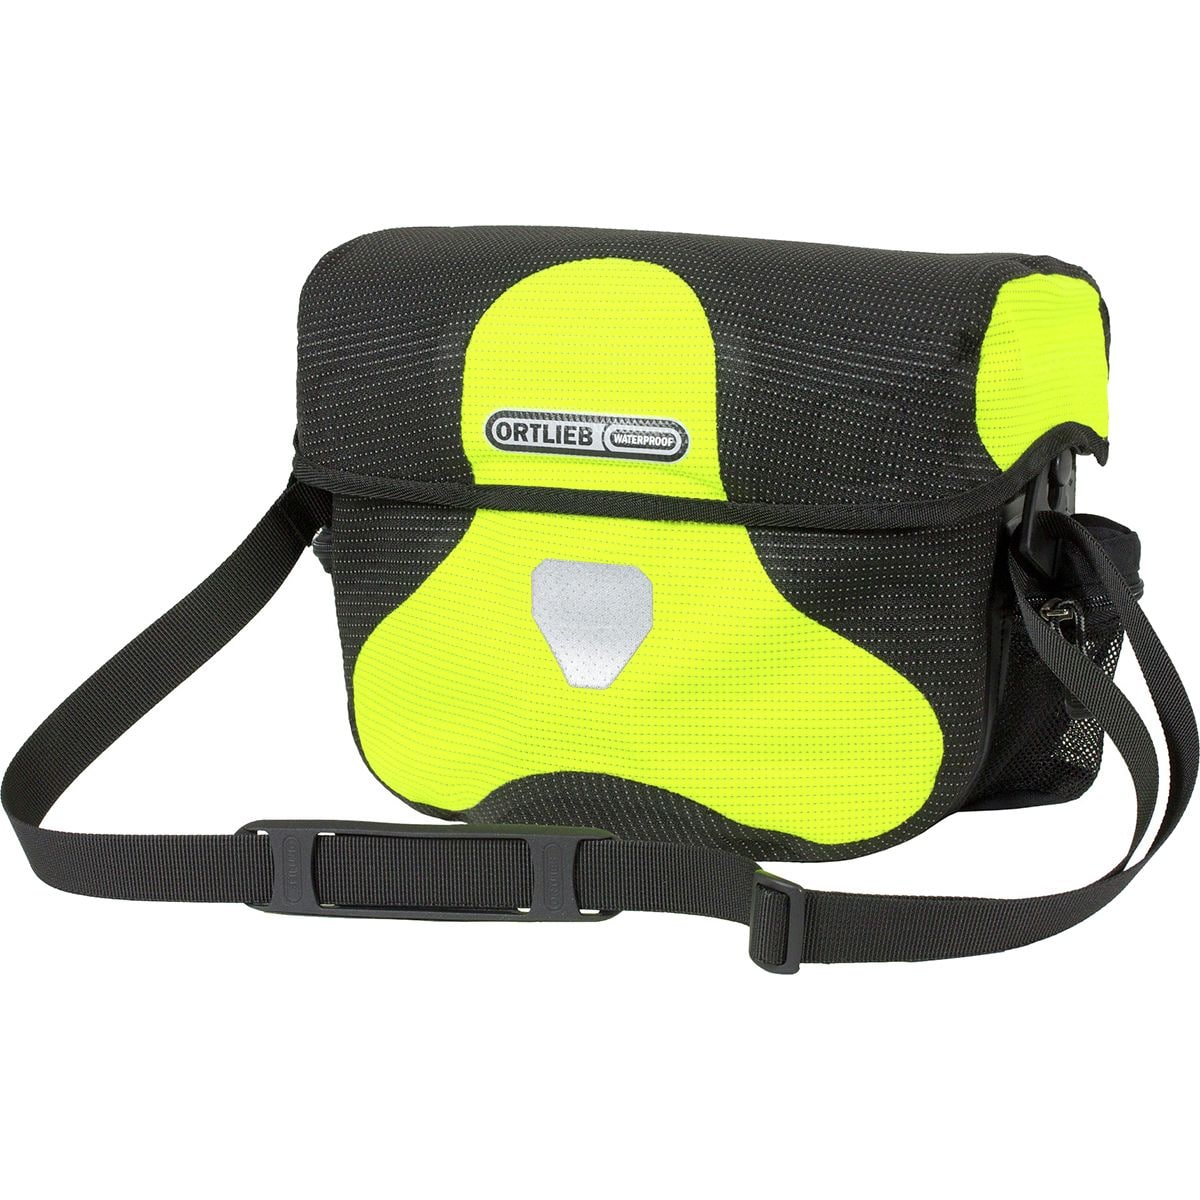 Ortlieb Ultimate 6 High-Visibility Handlebar Bag